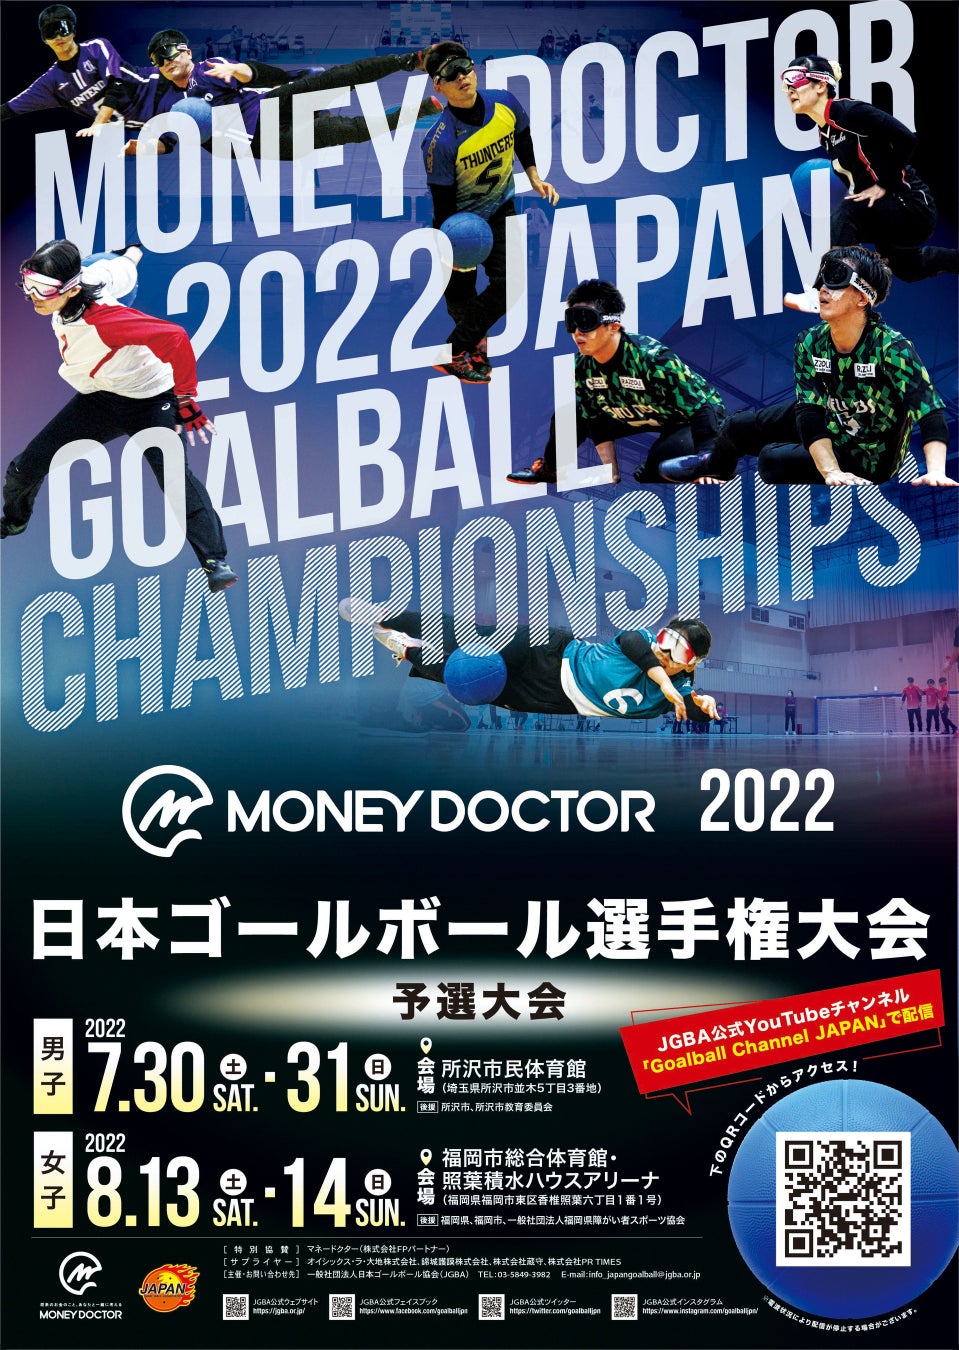 Mastercardと日本ラグビーフットボール協会がラグビー日本代表オフィシャルサポーター契約を締結